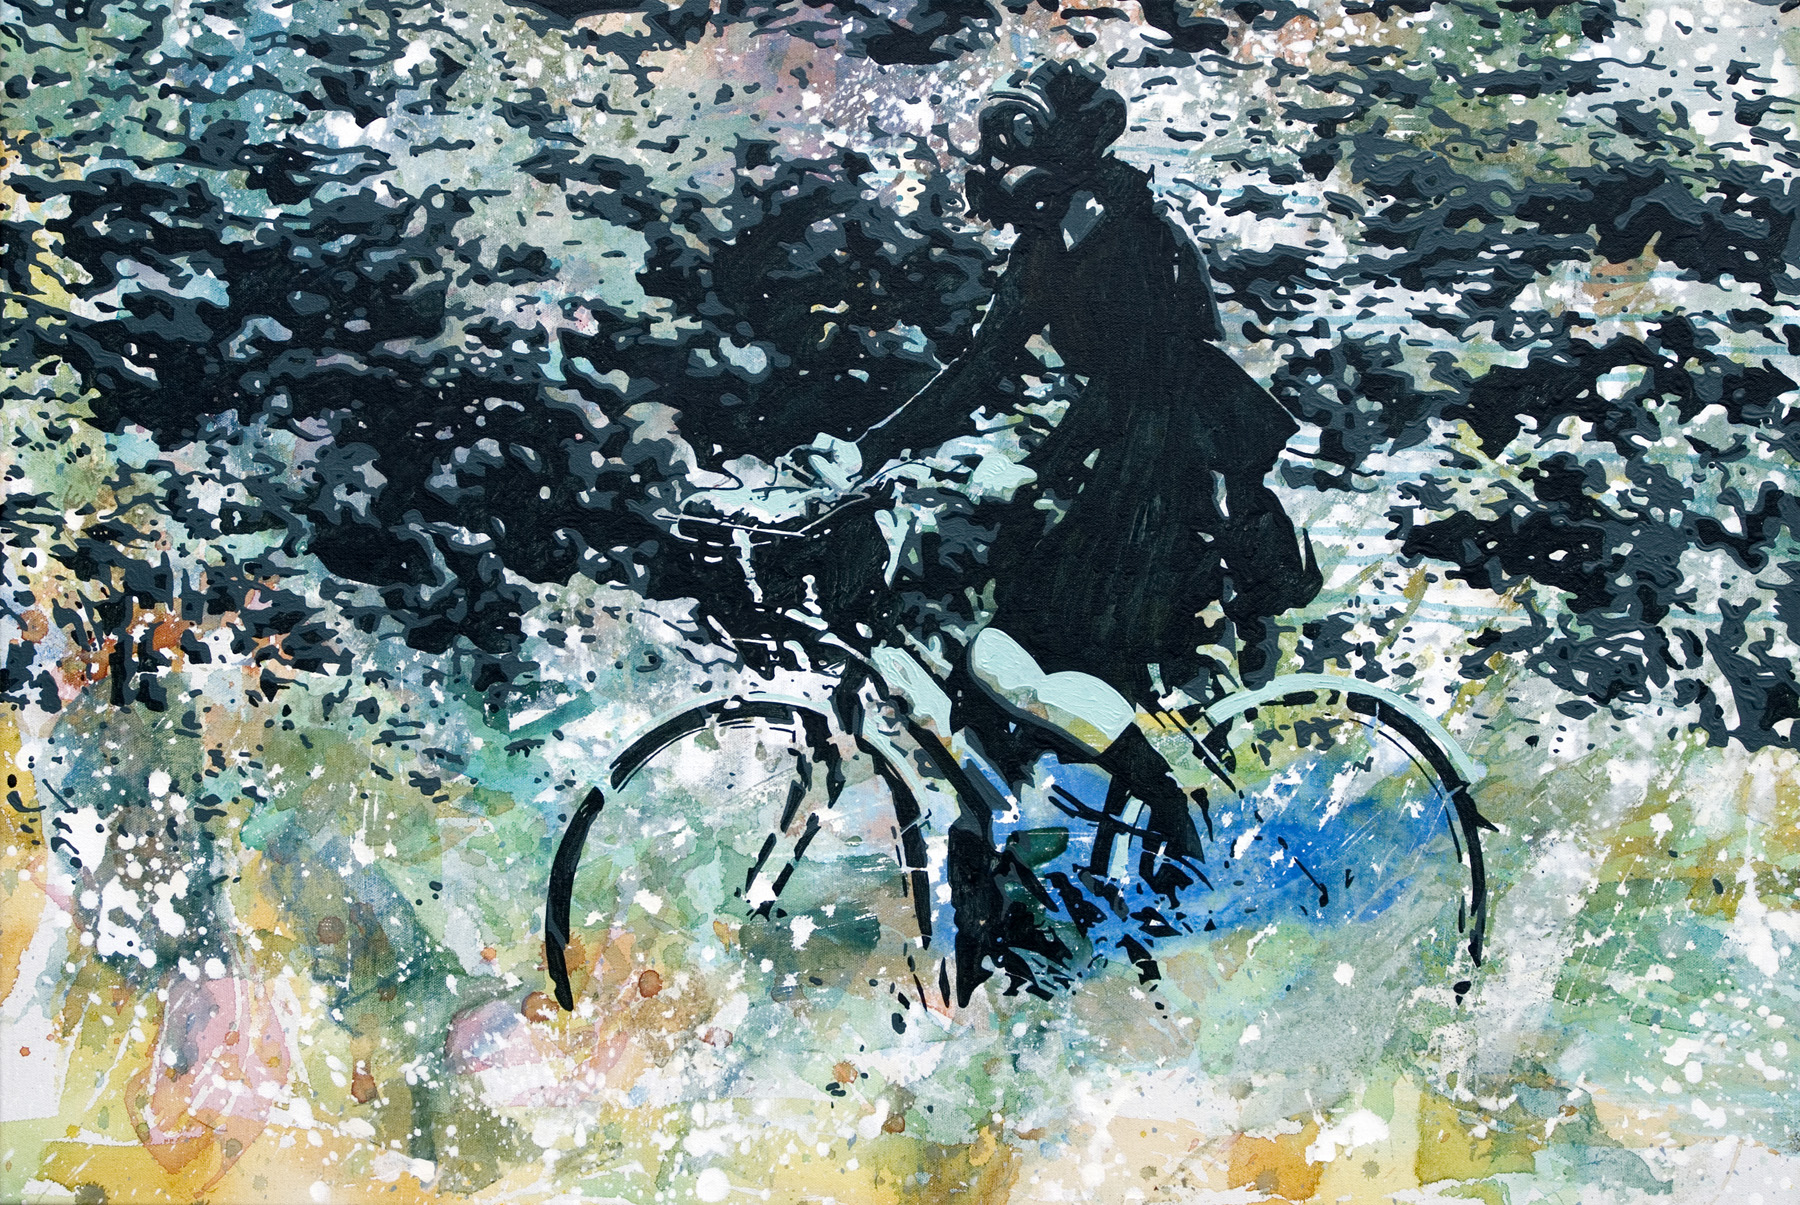 Bicycle Race - Oil & Acrylic on Canvas